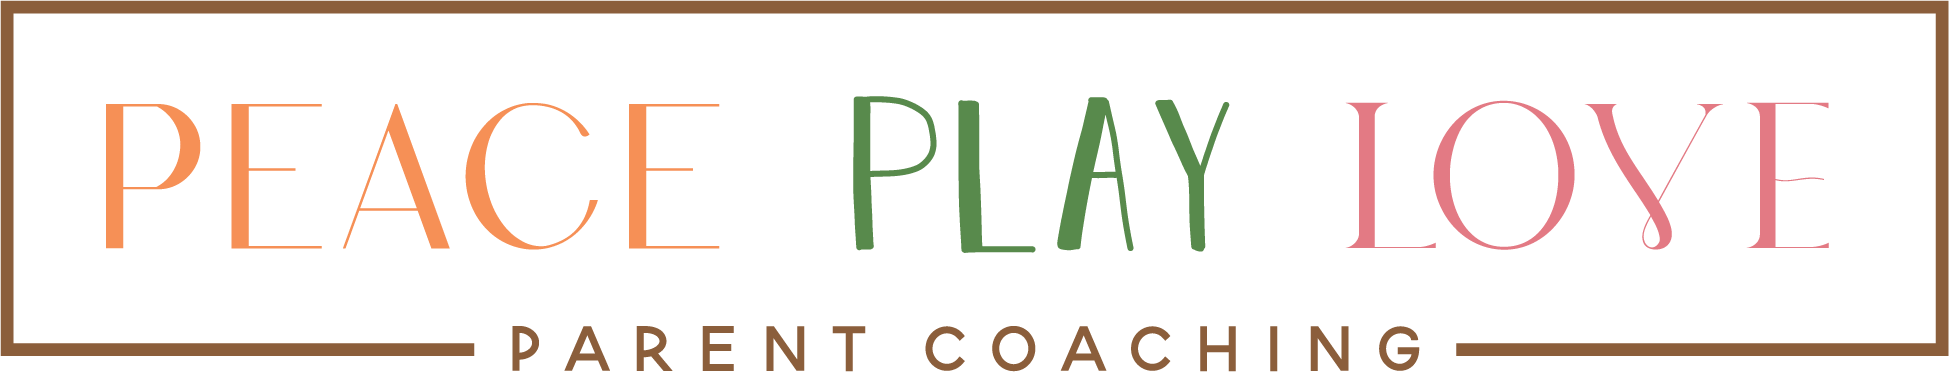 Peace Play Love Parent Coaching